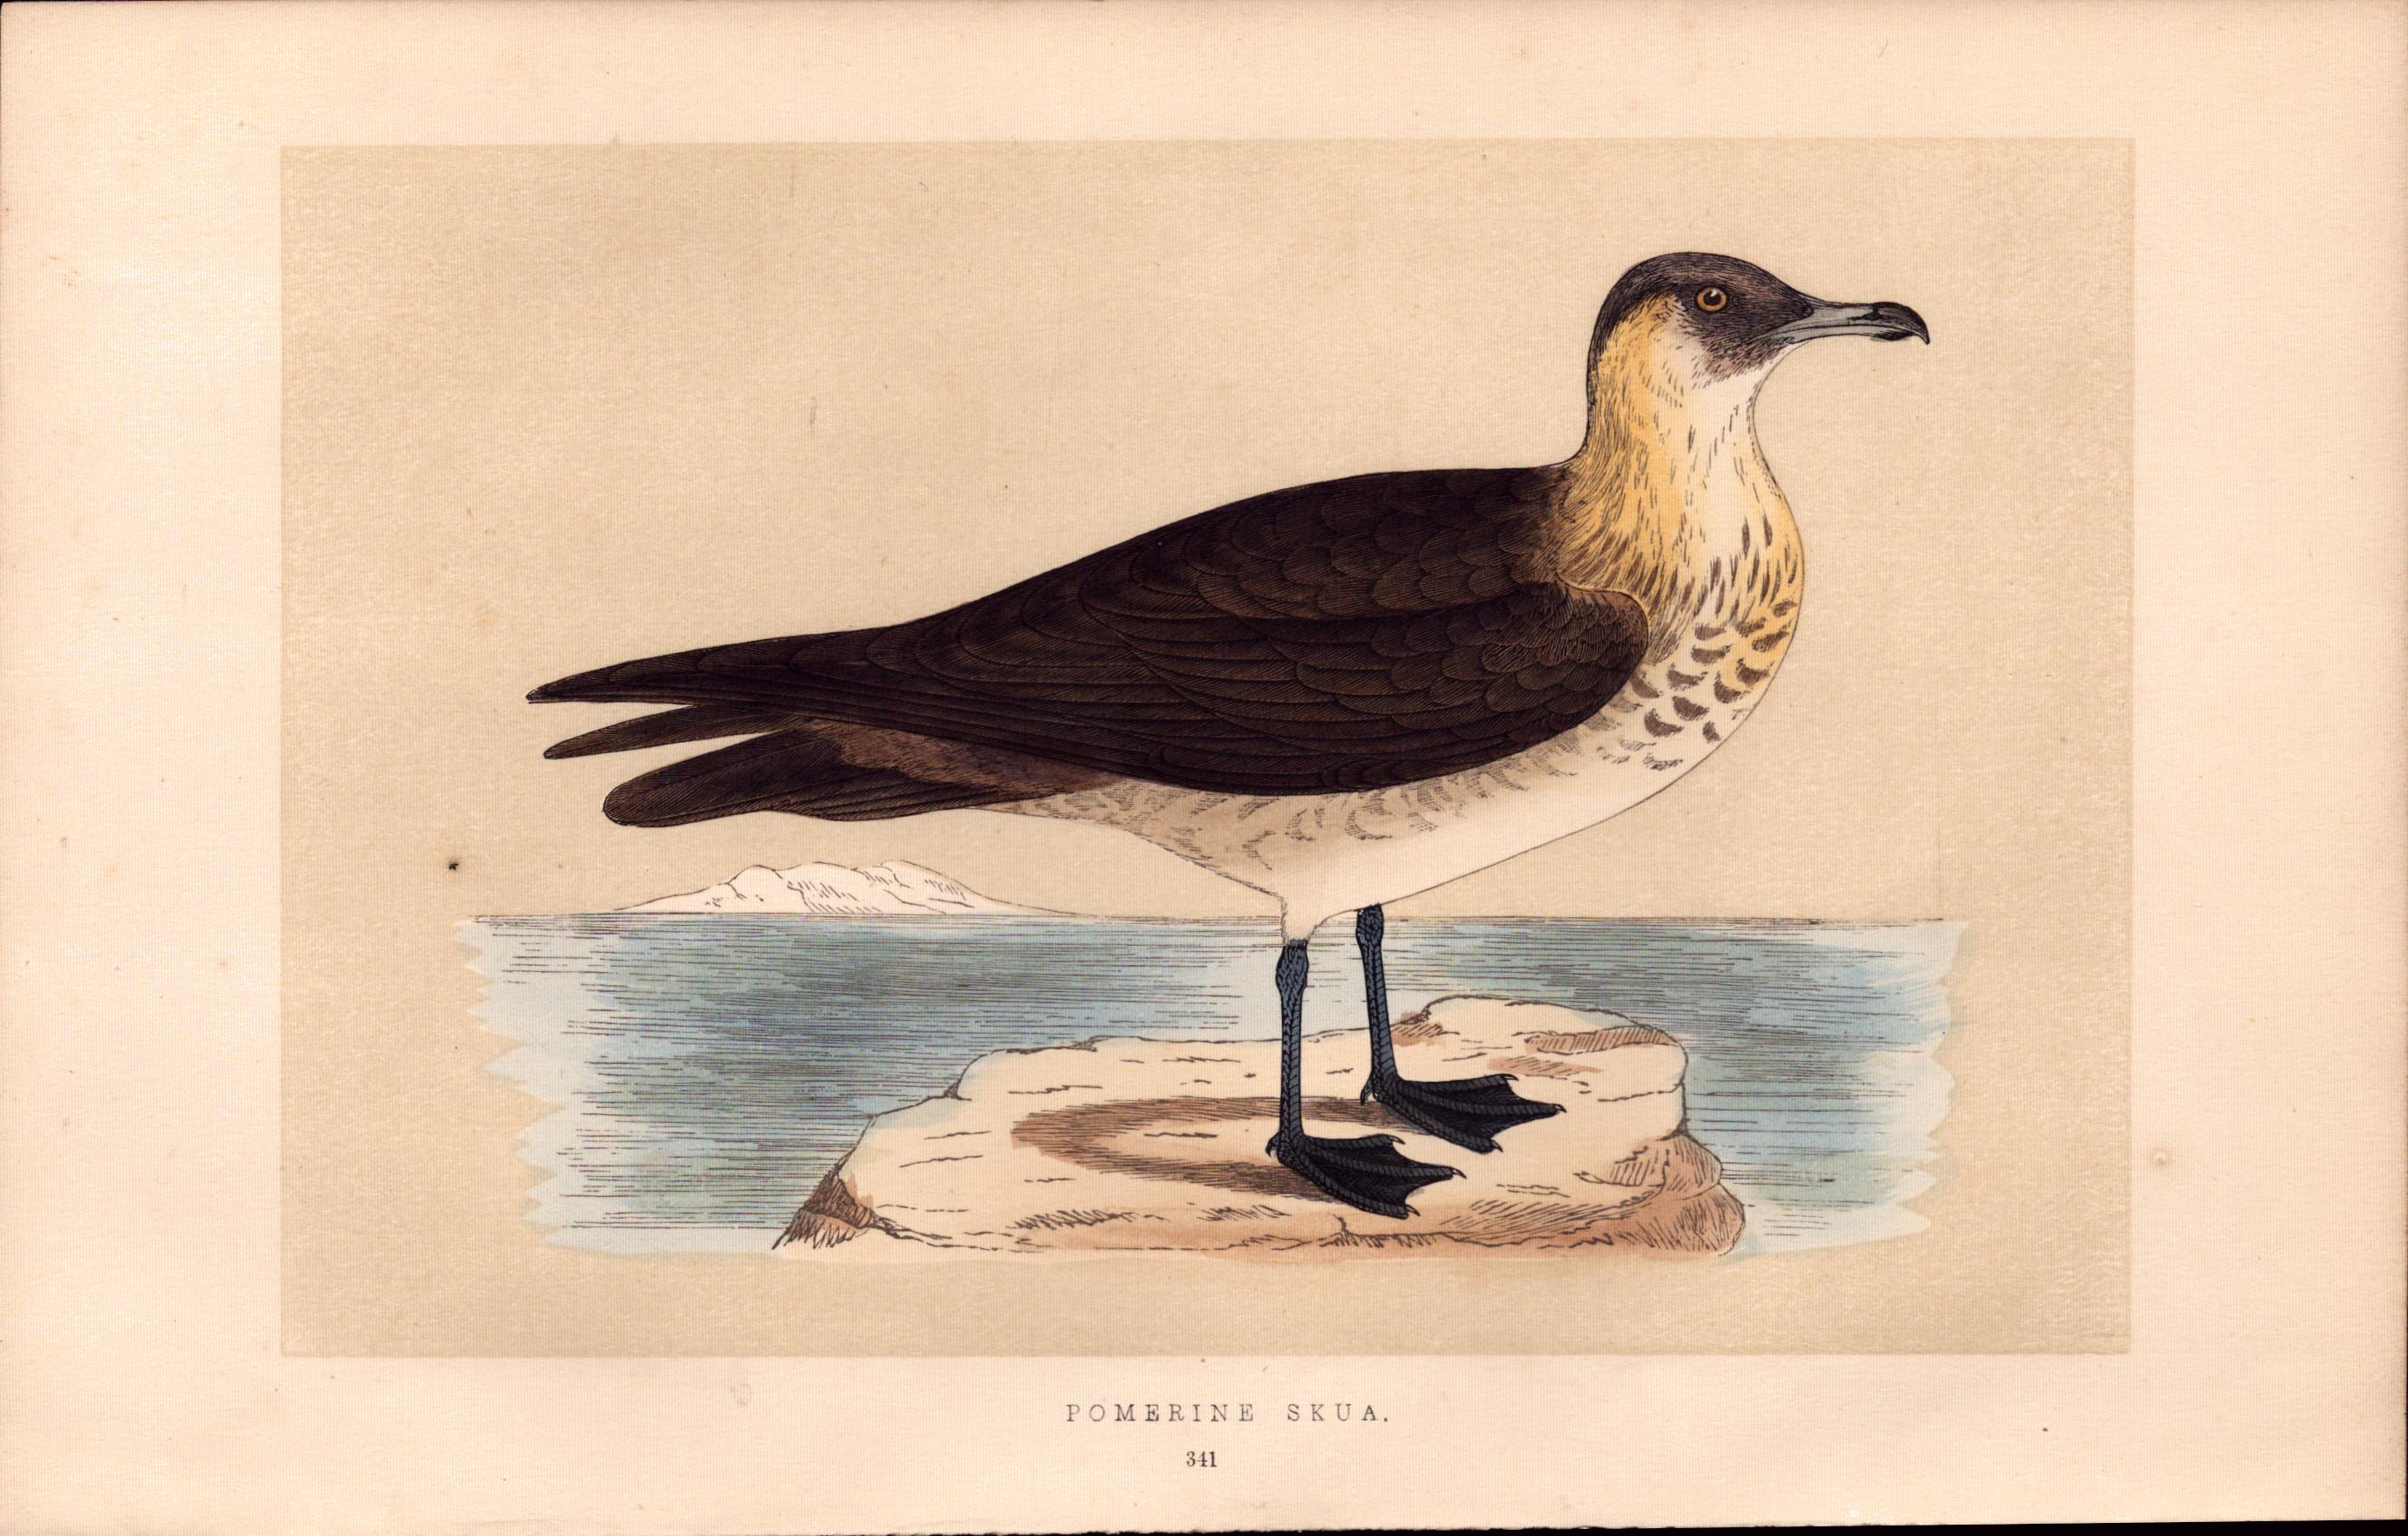 Pomerine Skua Rev Morris Antique History of British Birds Engraving.